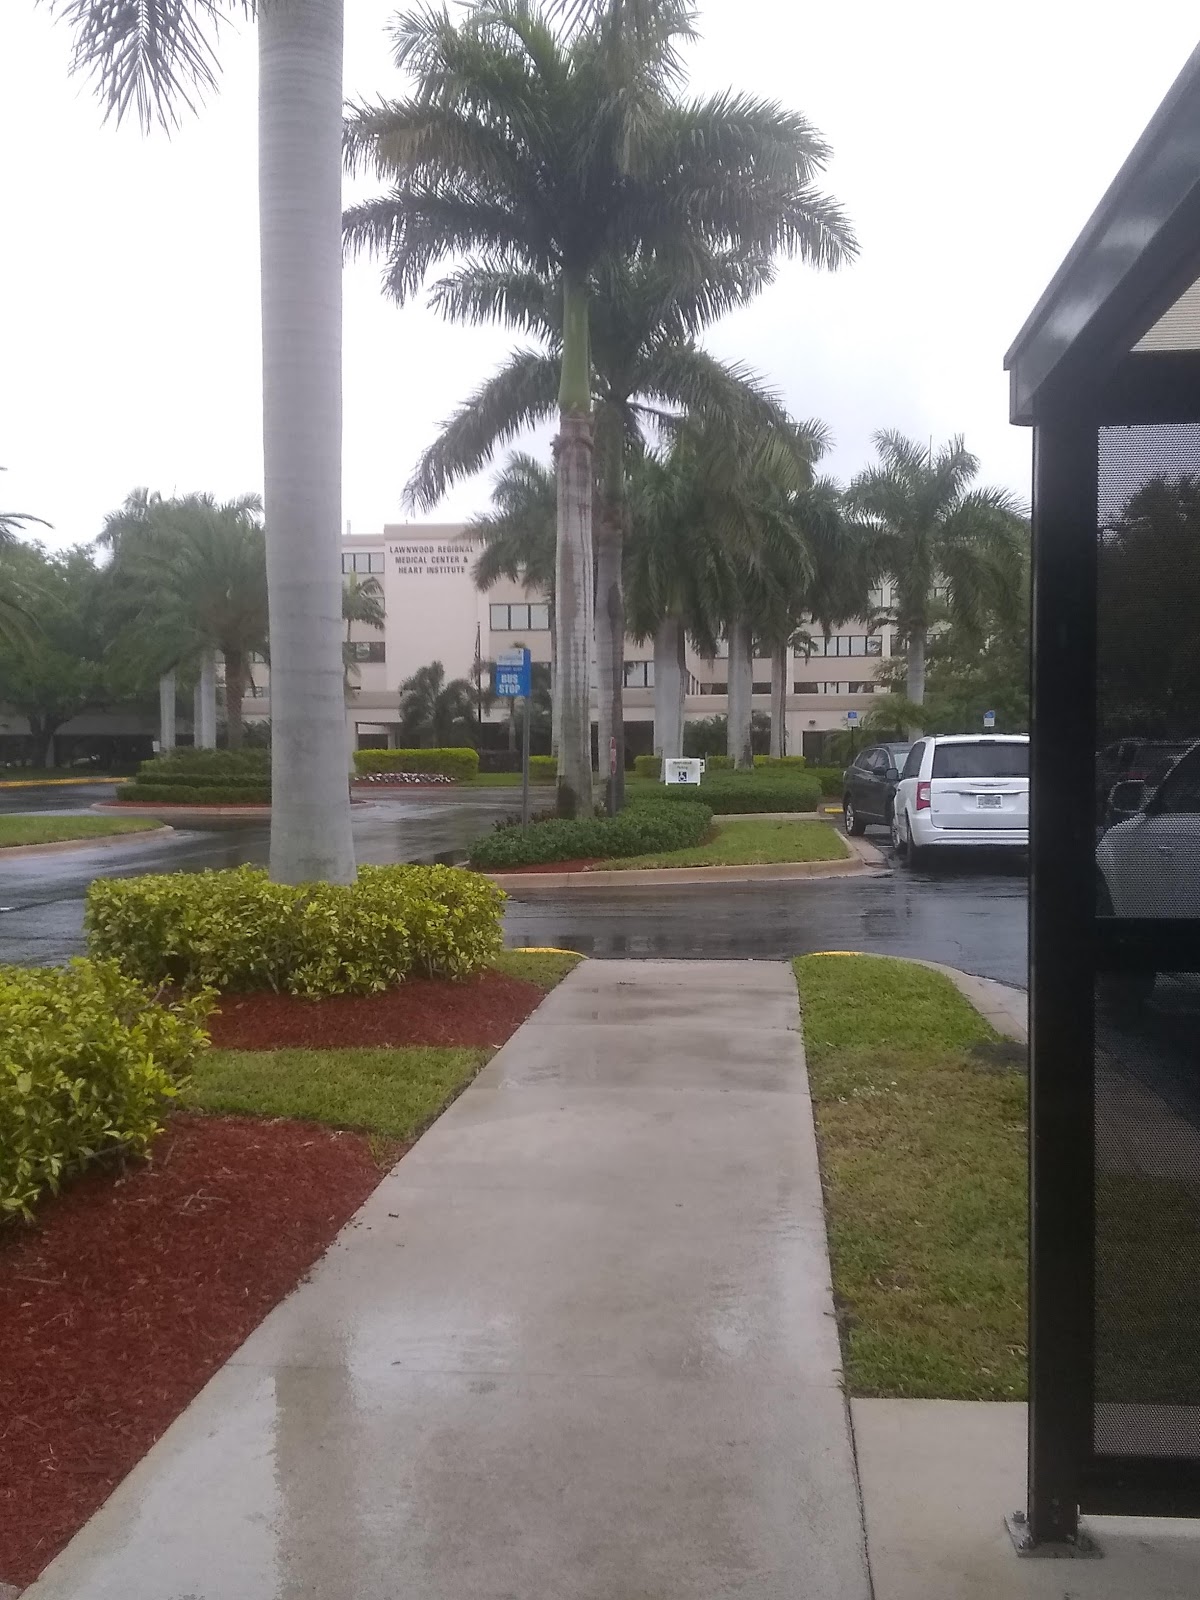 HCA Florida Lawnwood Hospital - Mental Health Services